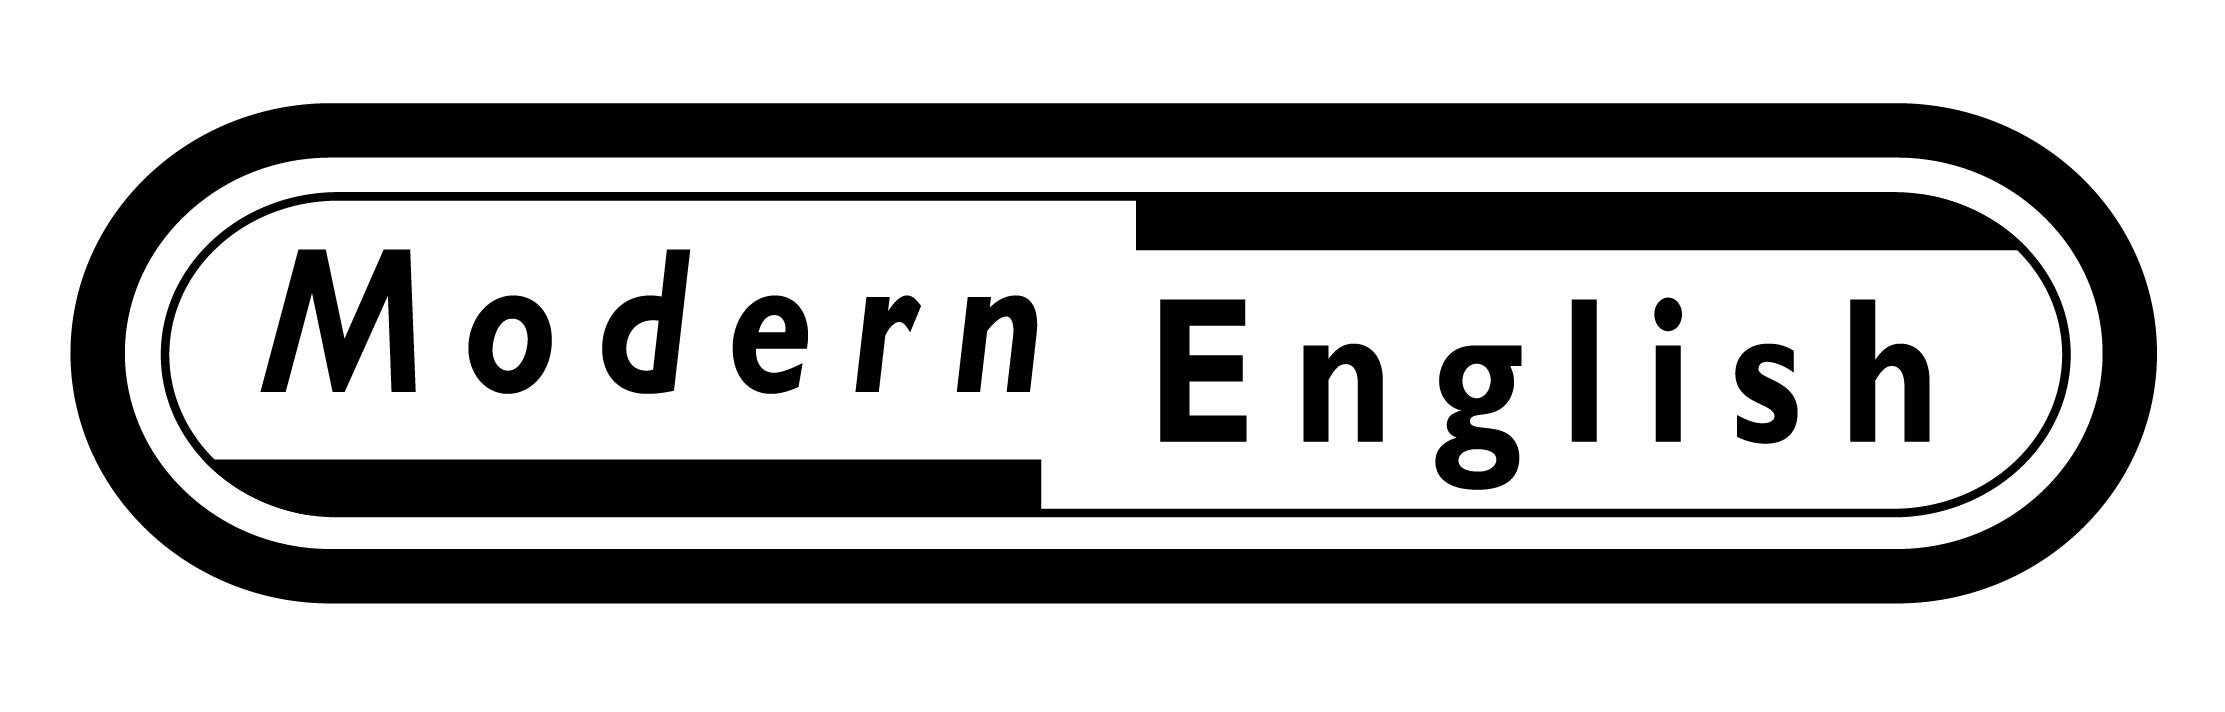 modern english logo 2020.jpg